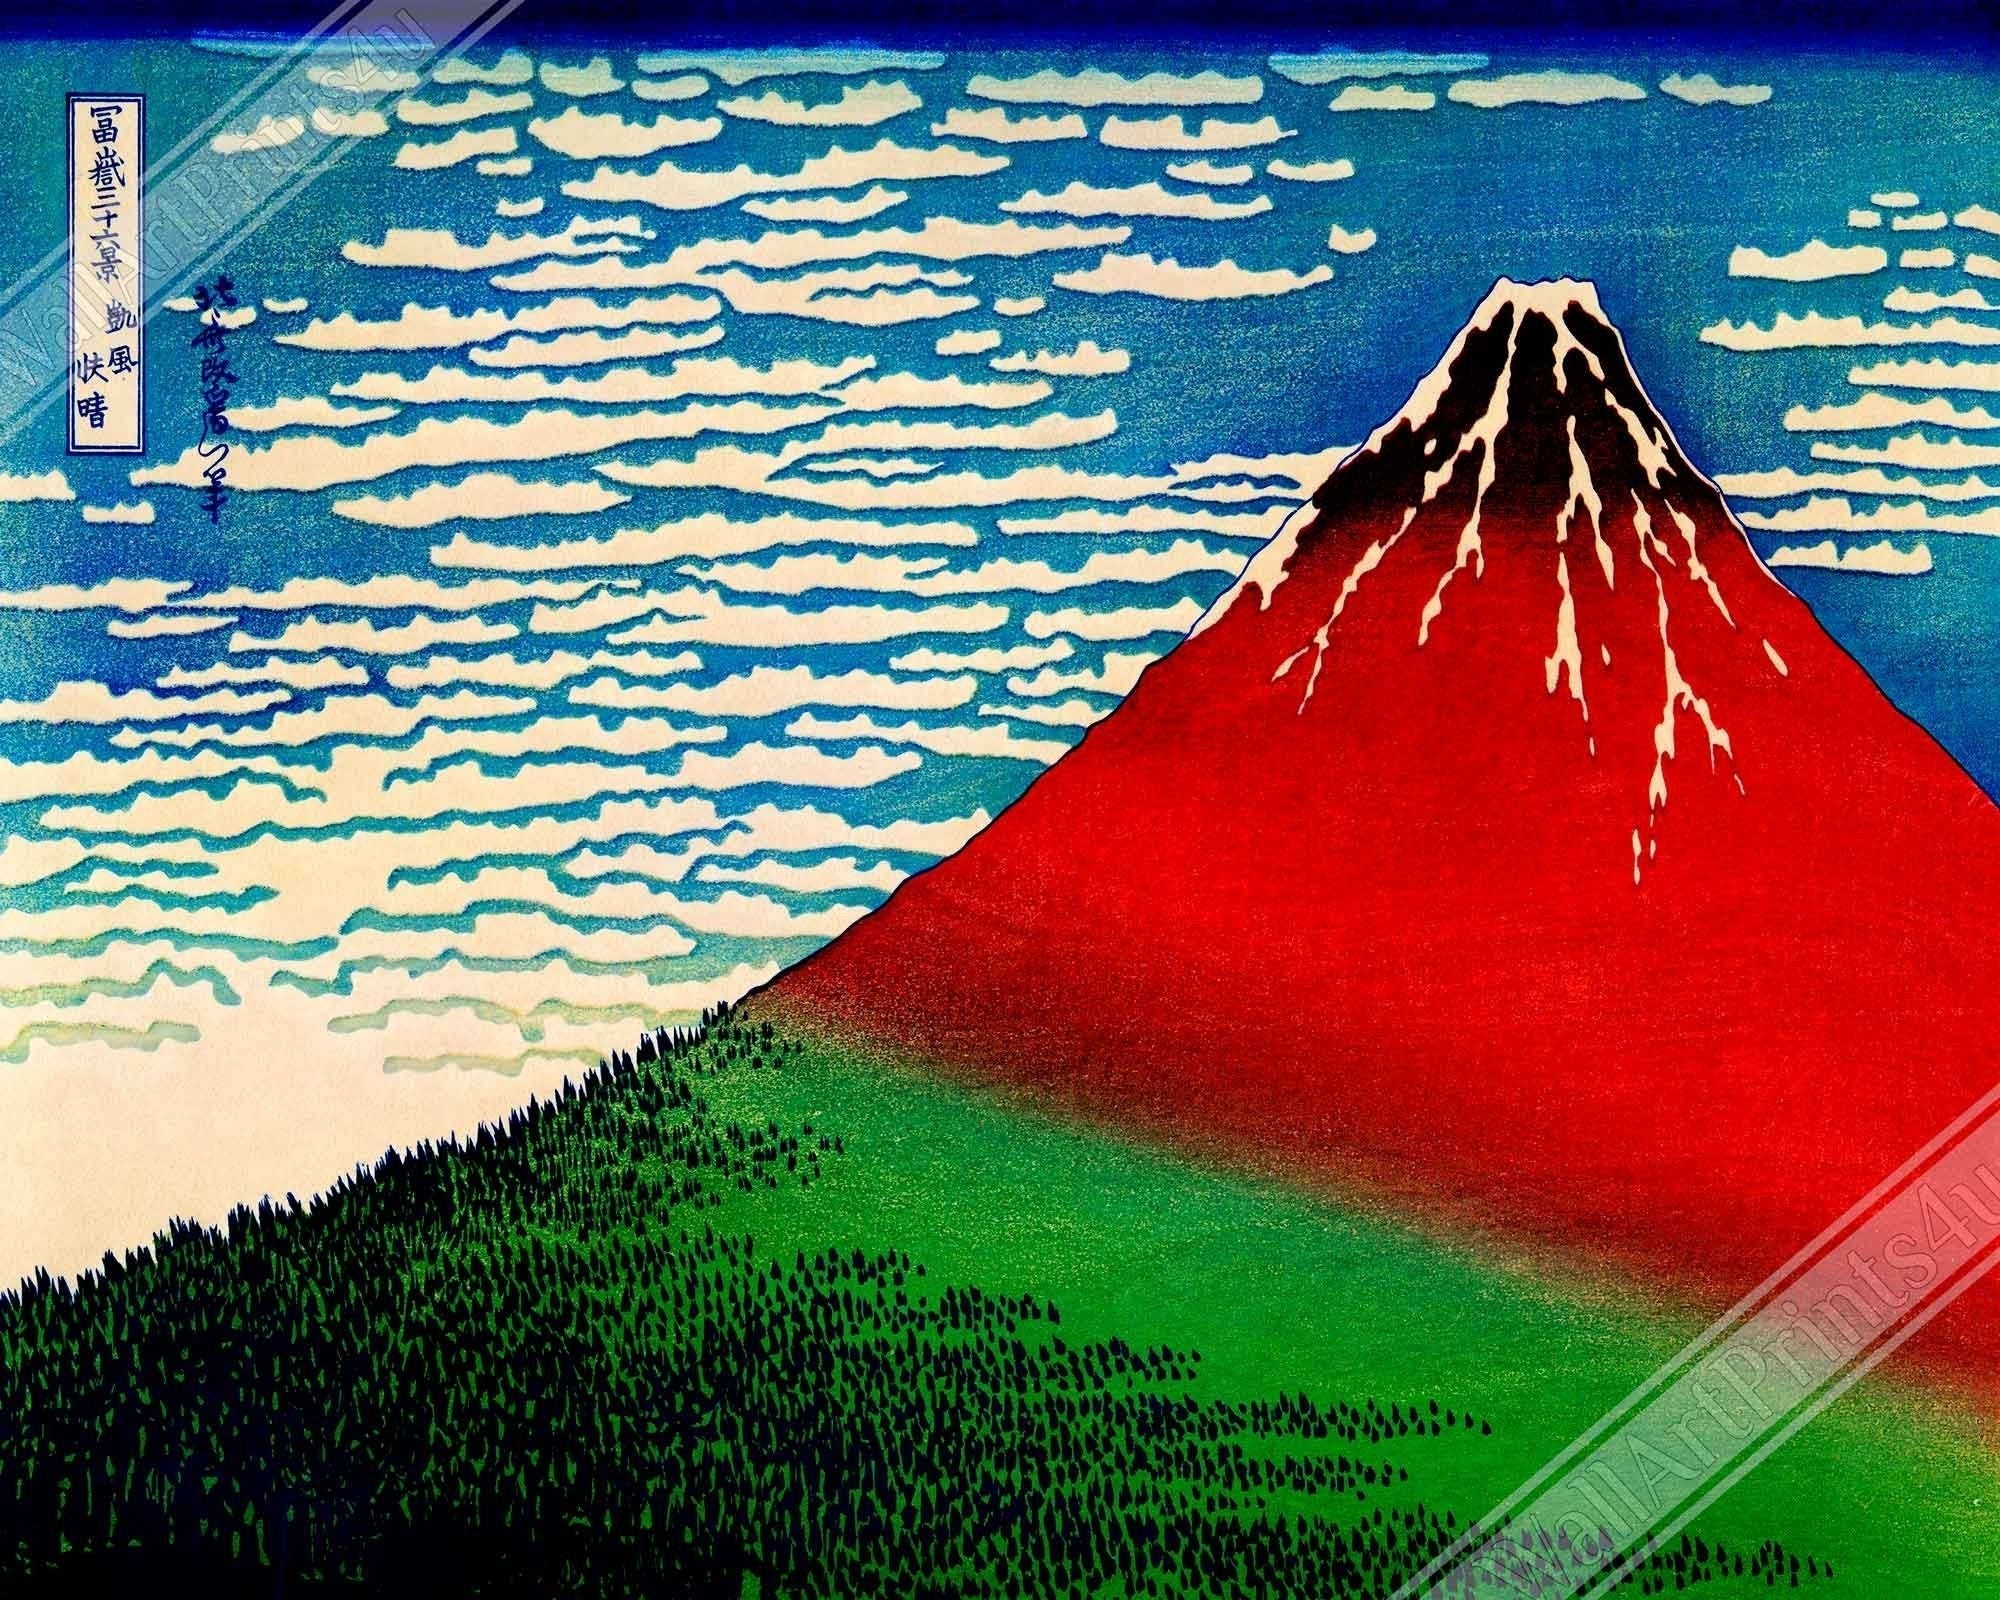 Mount Fuji Framed Print, Katsushika Hokusai 1833 - Mount Fuji Framed - Red Fuji Framed Print - WallArtPrints4U